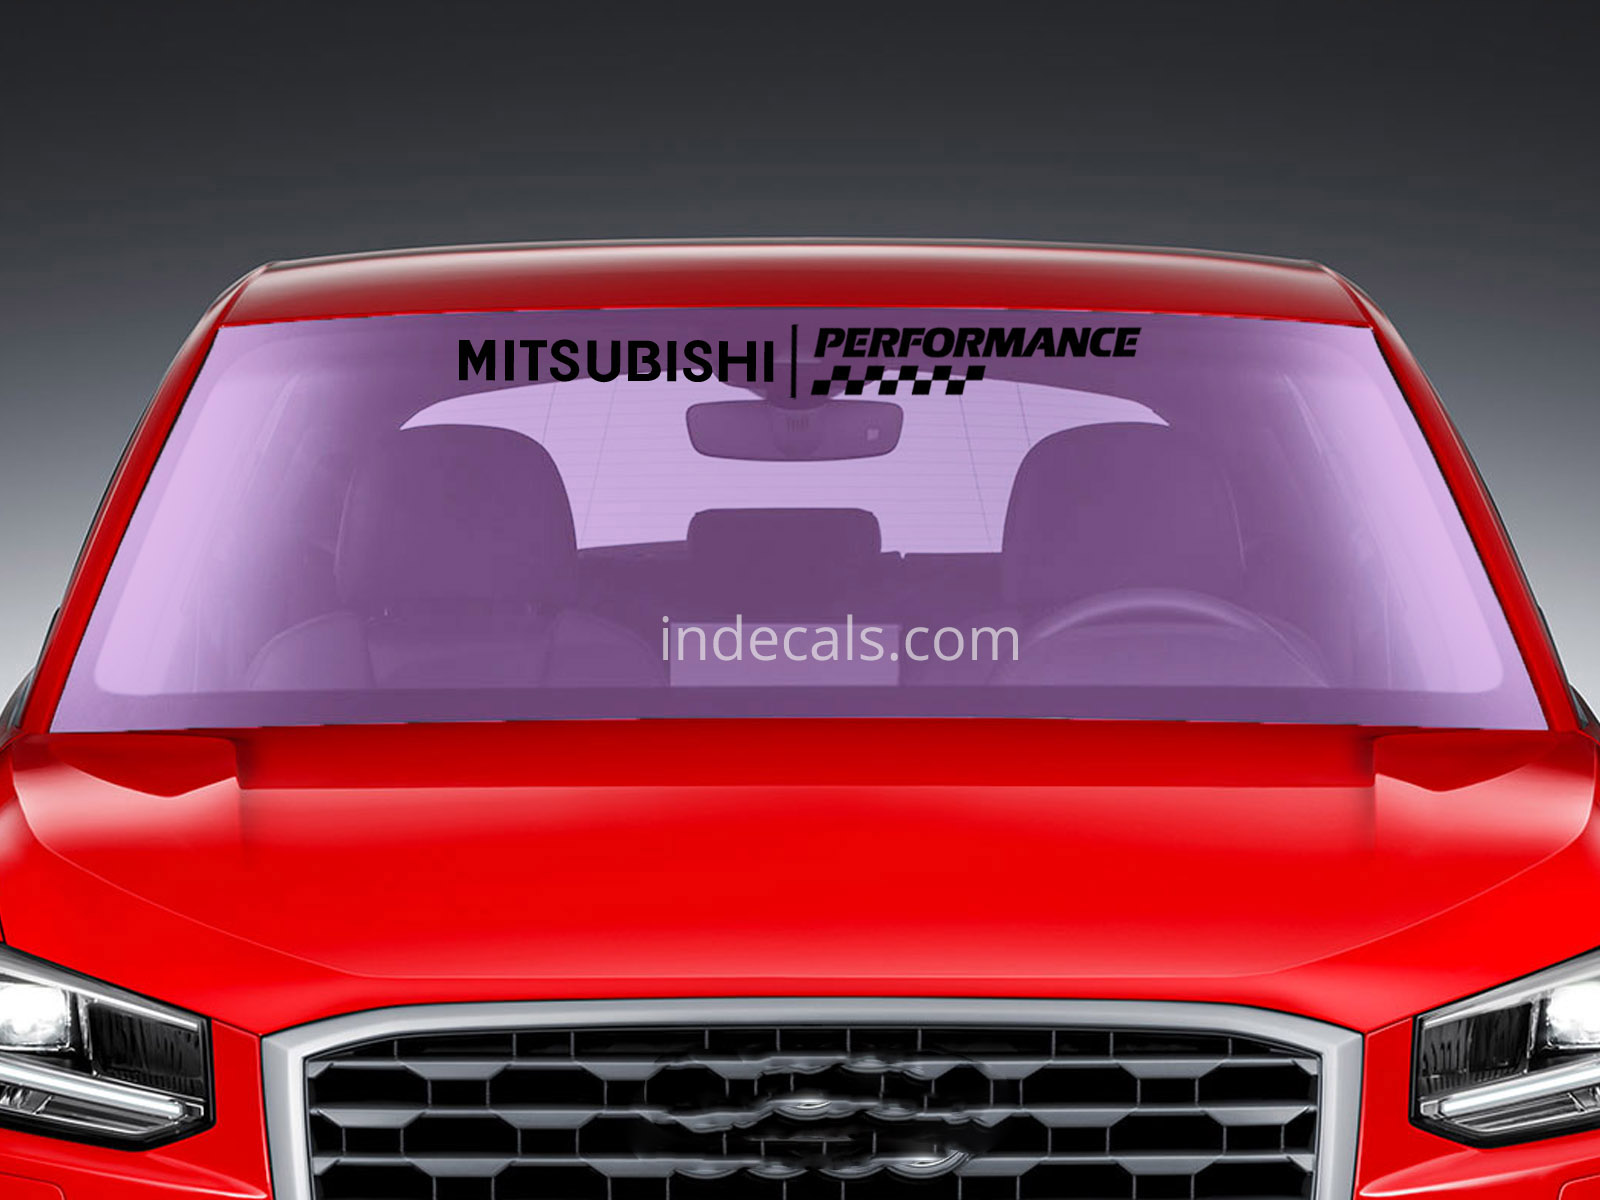 1 x Mitsubishi Performance Sticker for Windshield or Back Window - Black